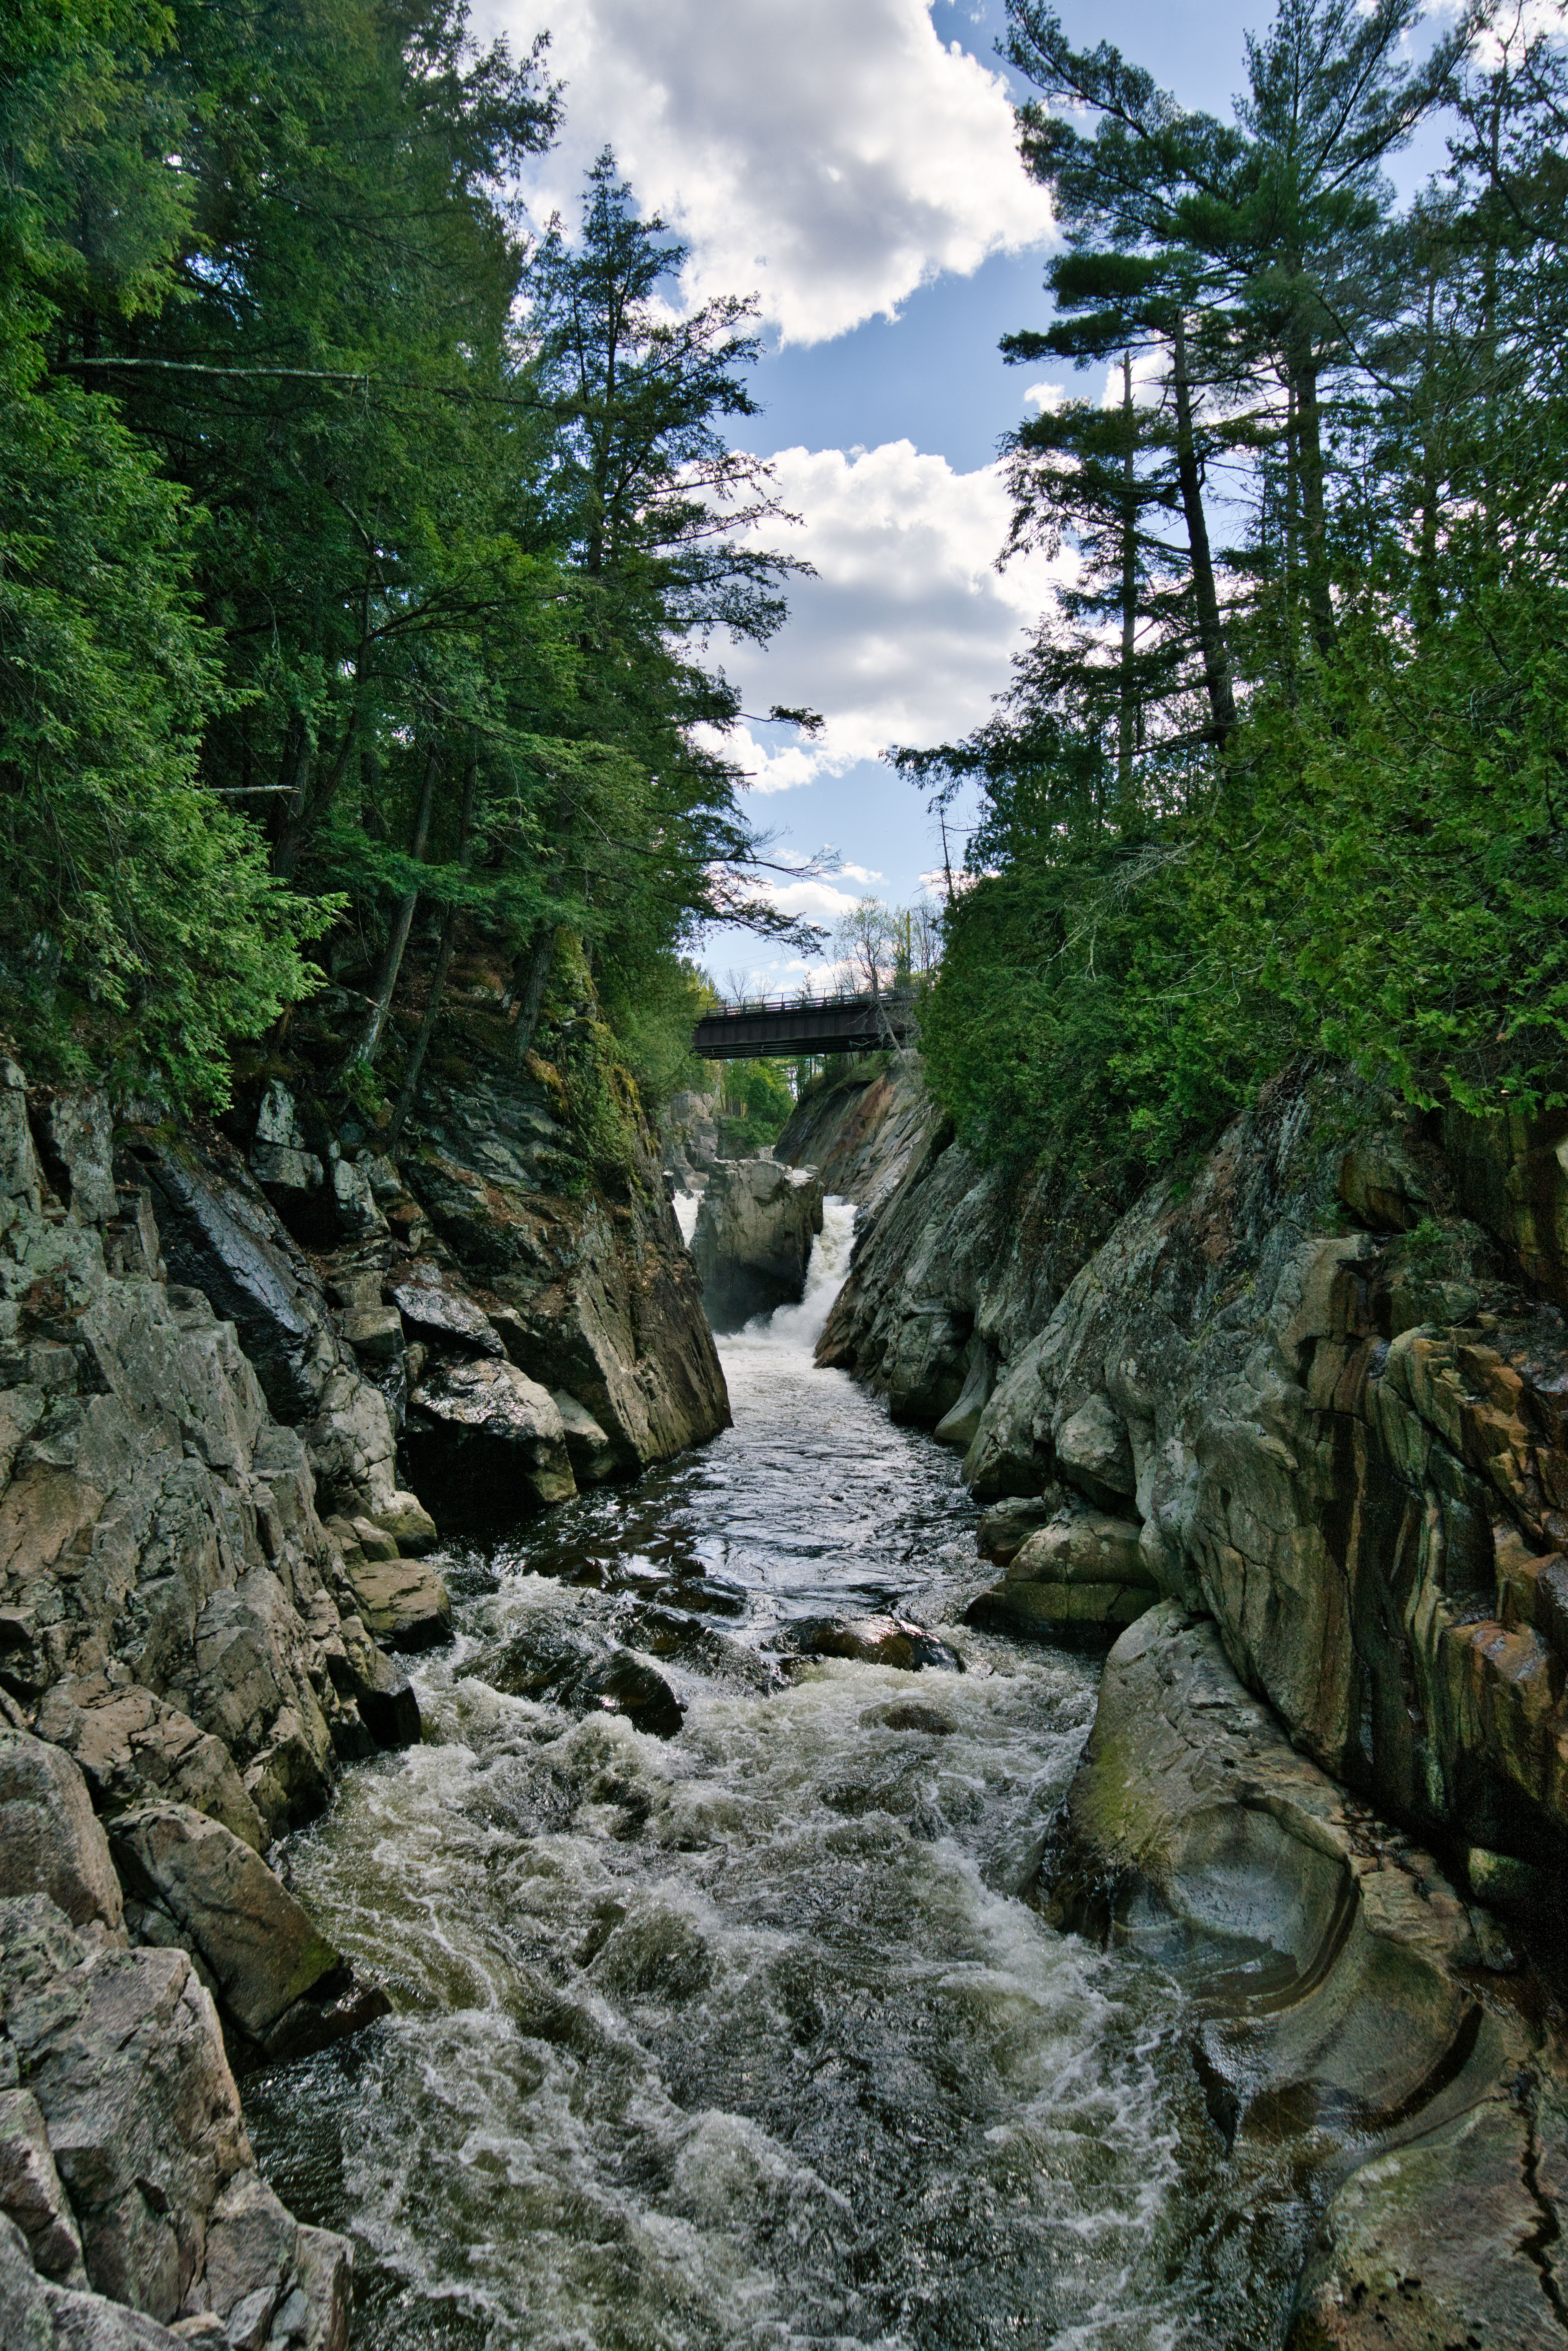 The bridge of the beginning of Flume Falls